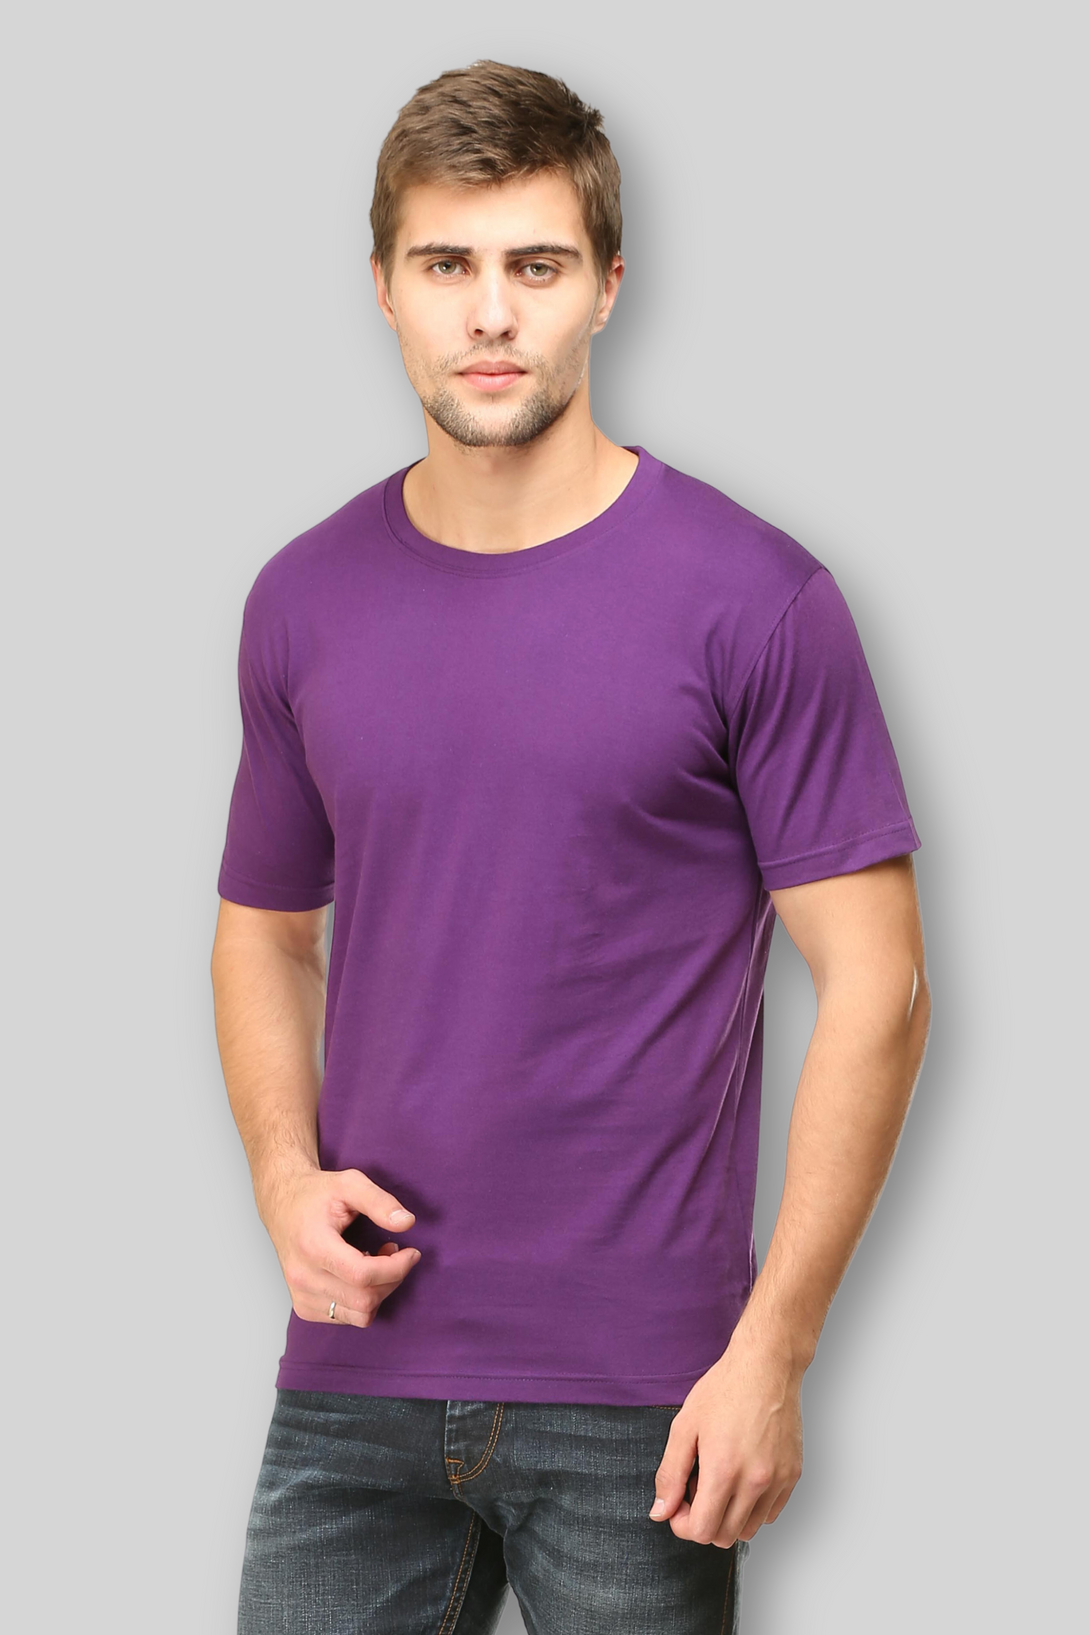 Purple T-Shirt For Men - WowWaves - 2